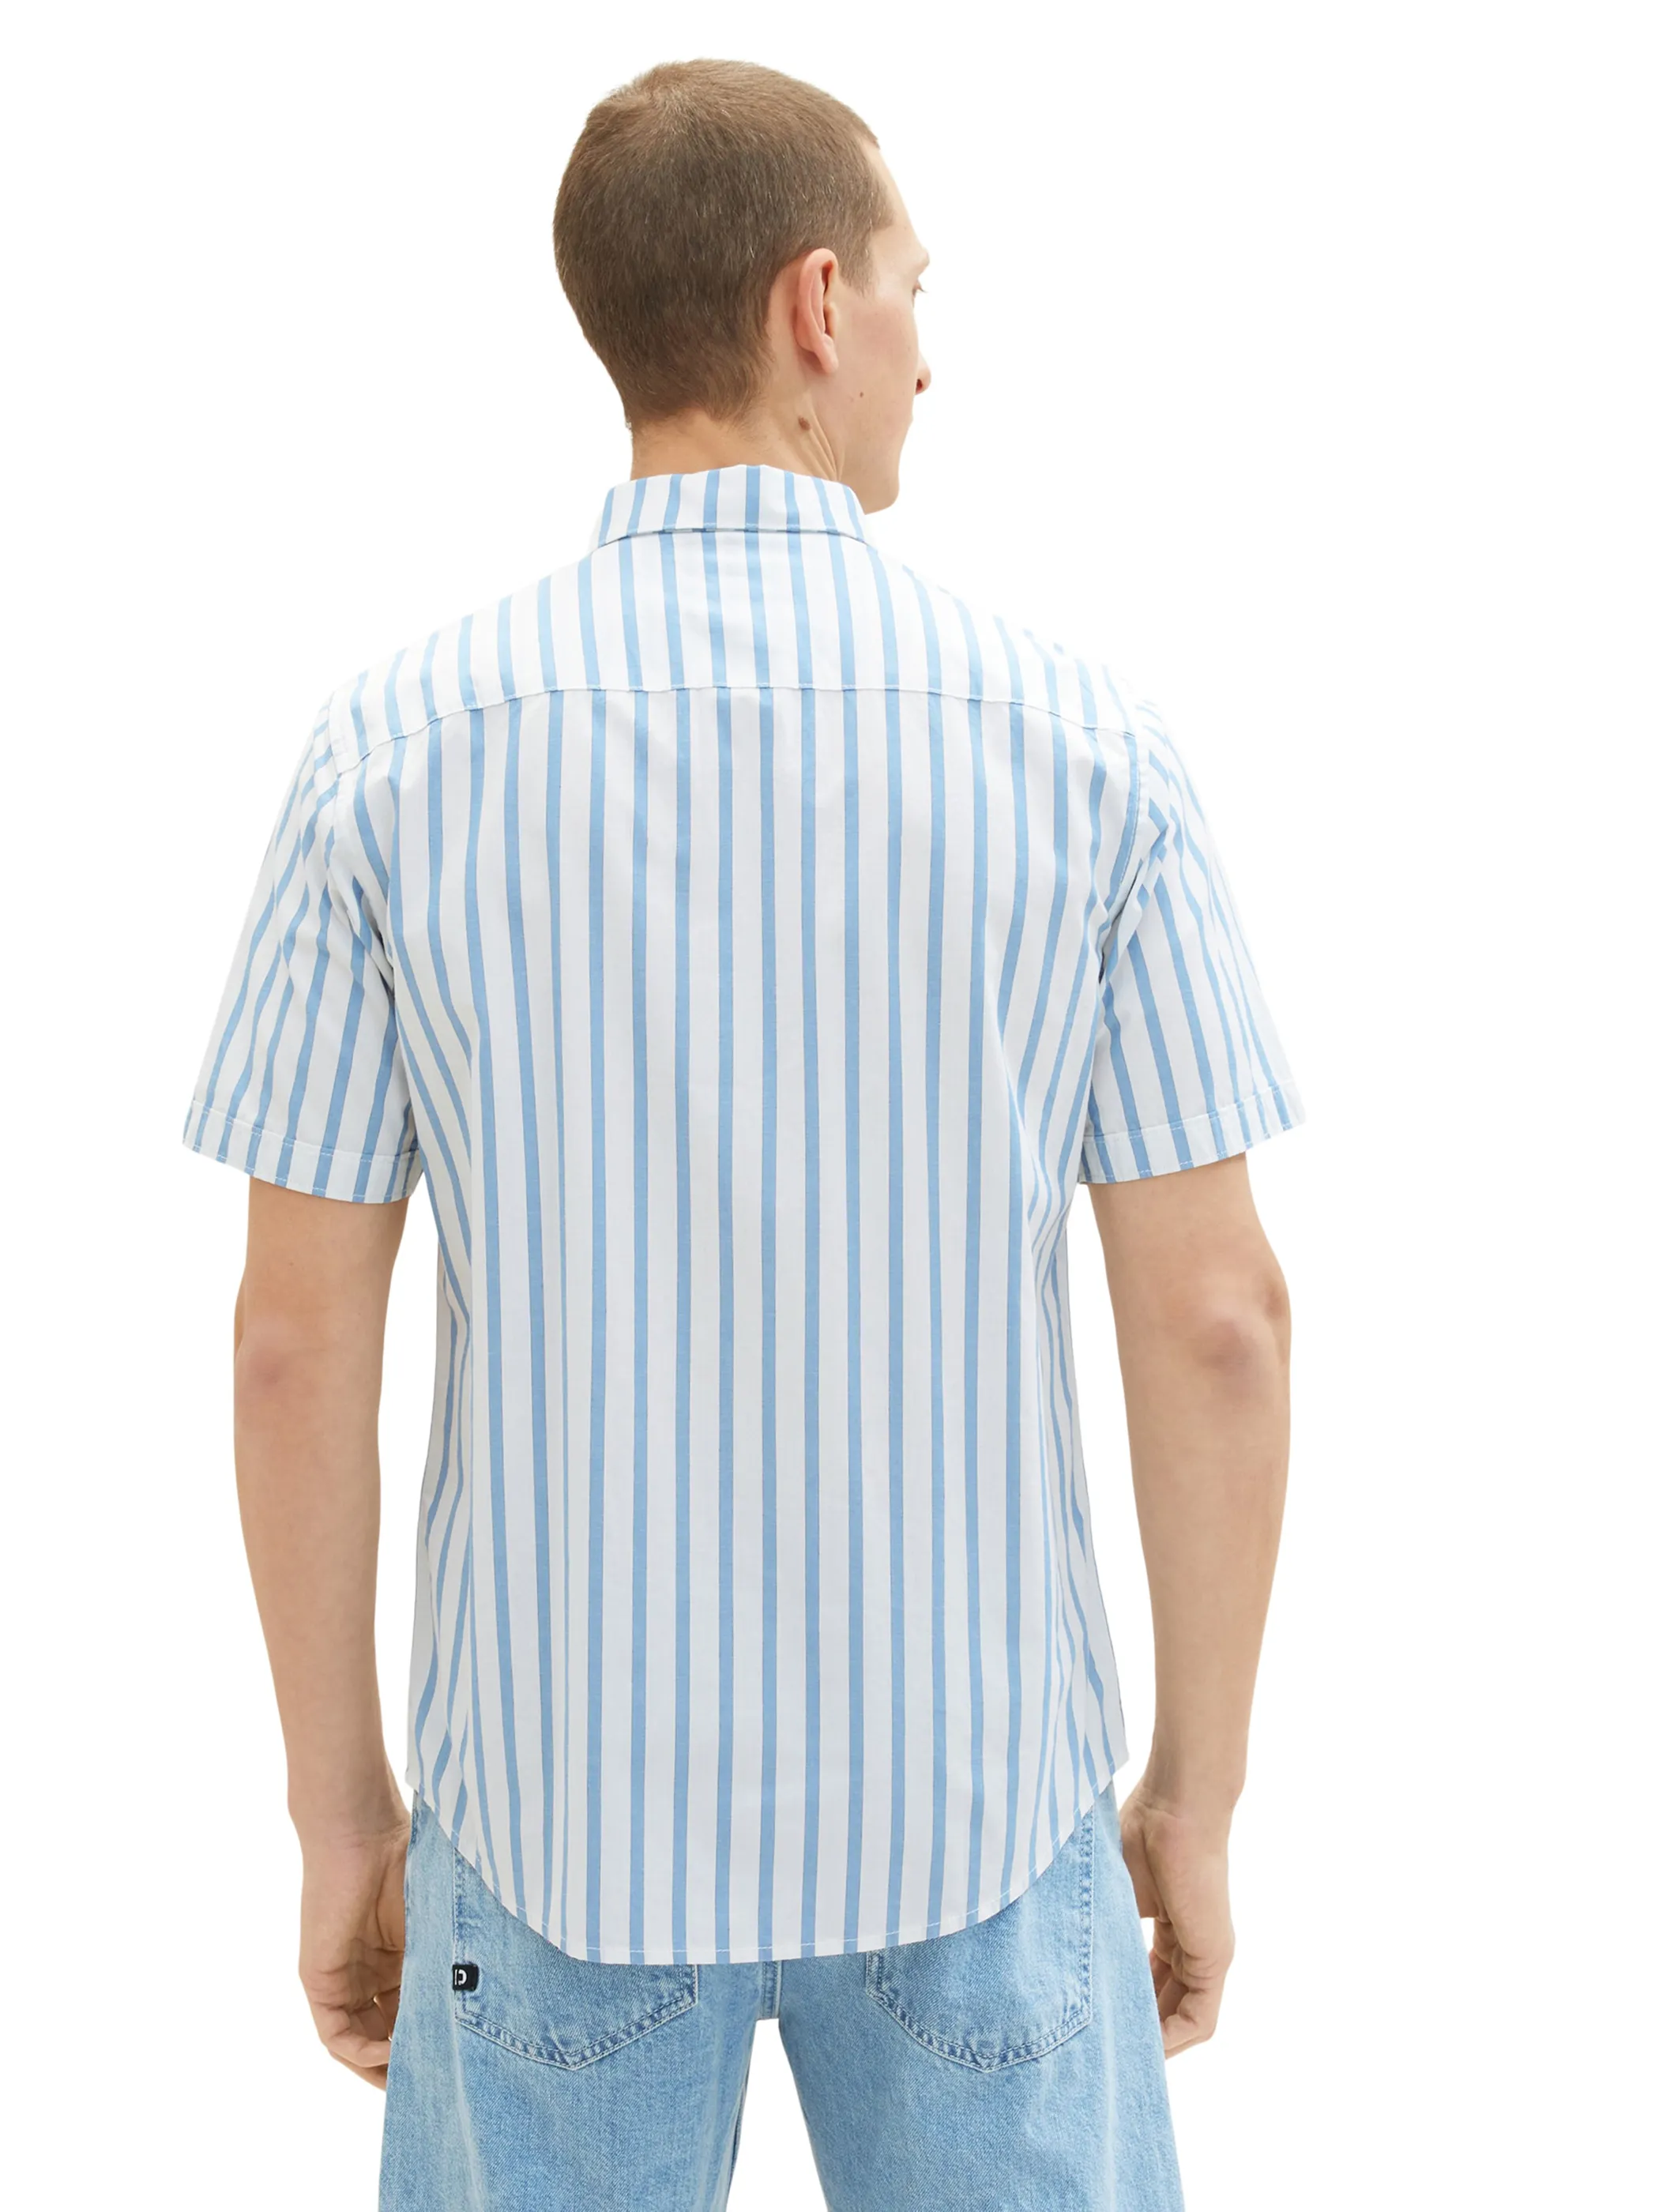 Tom Tailor 1037282 striped shirt Blau 880533 31789 2